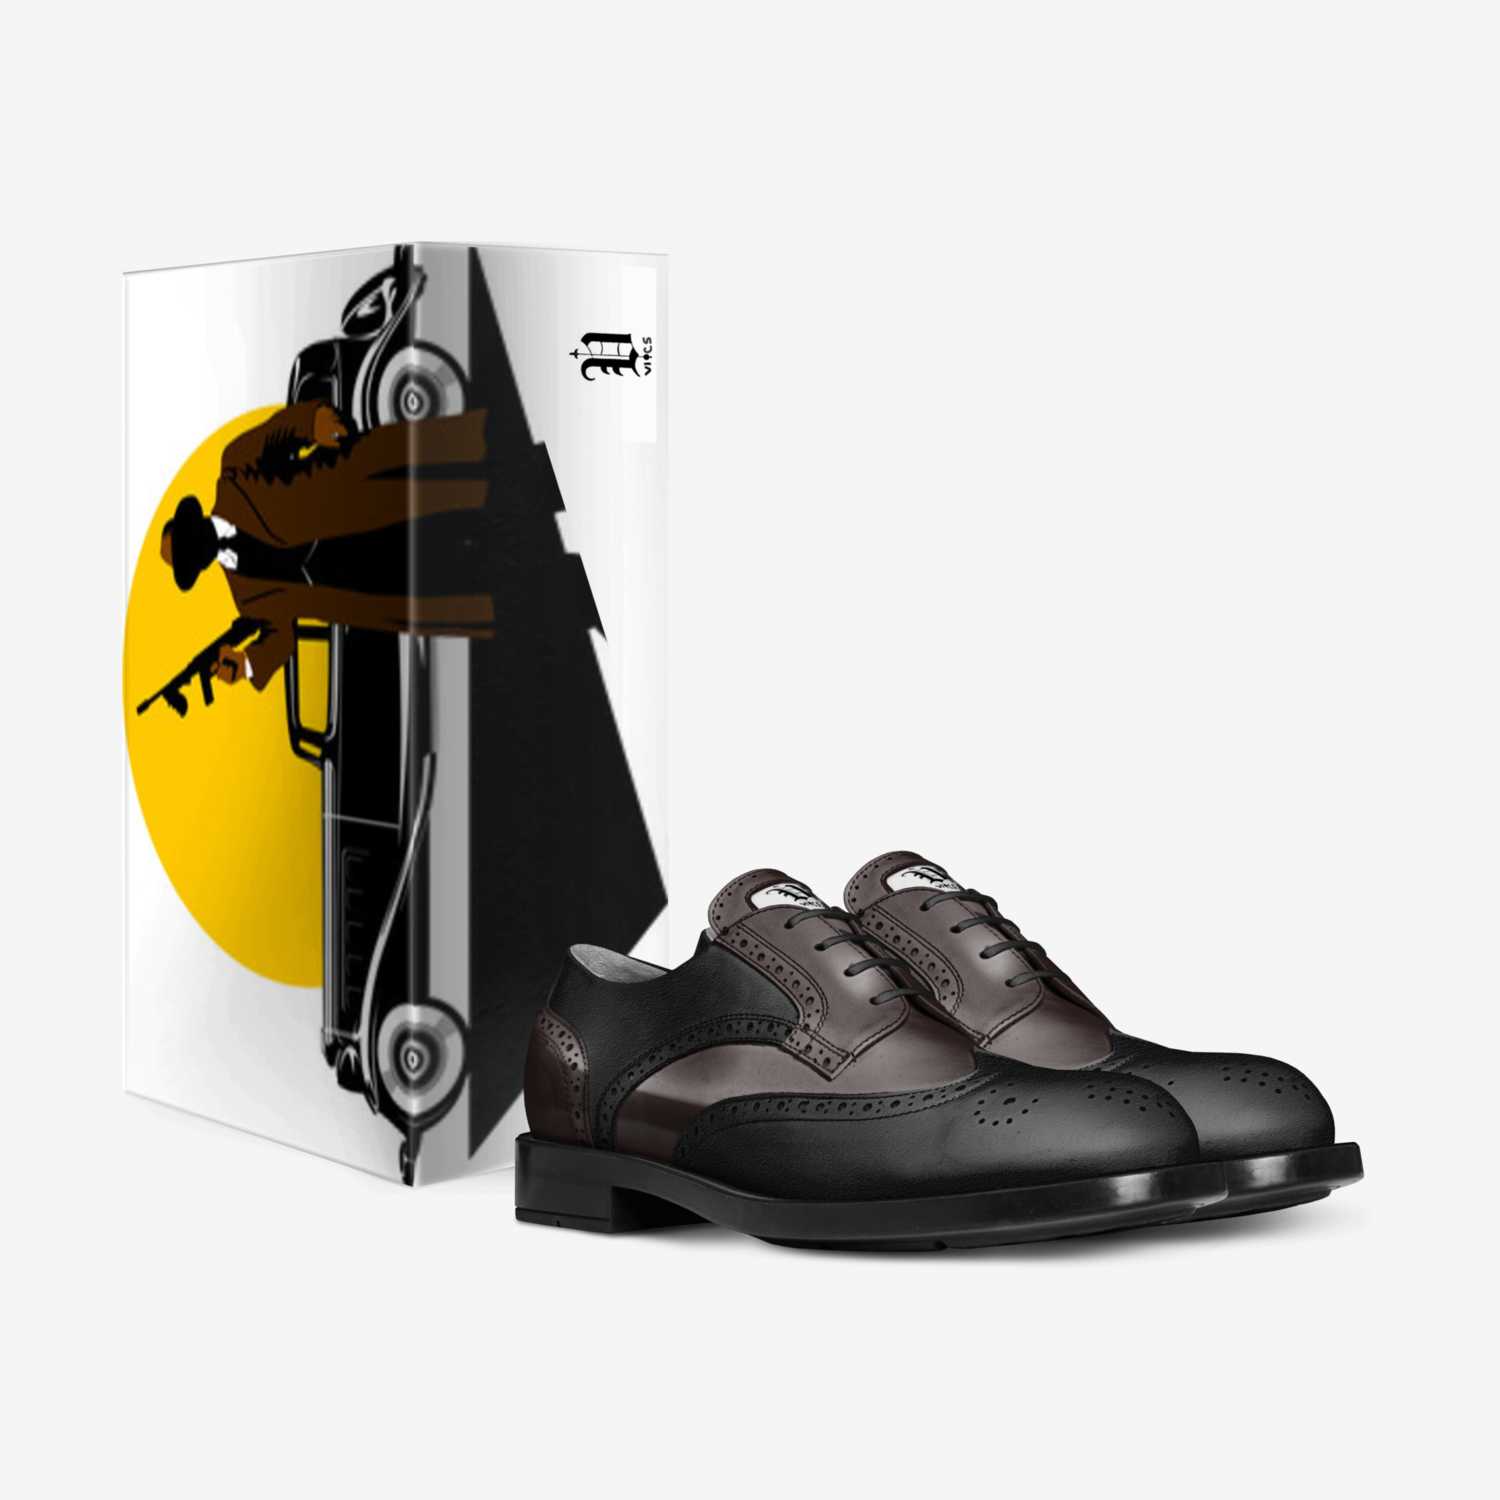 vics mafia 3 custom made in Italy shoes by Brayden Murphy | Box view